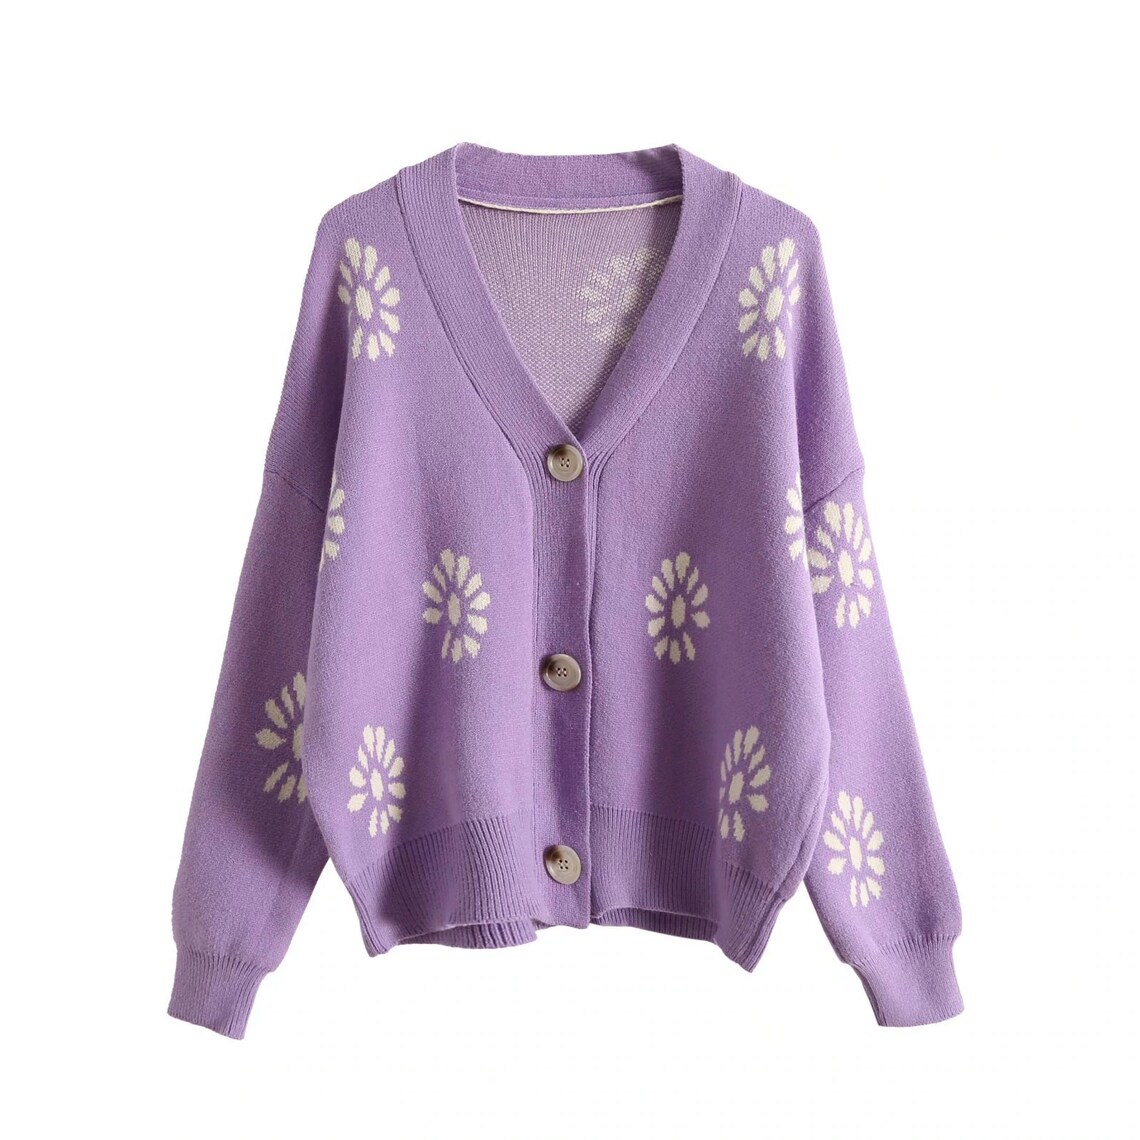 Daisy Flower Knitted Sweater Cardigan Long Sleeve Outwear | Etsy